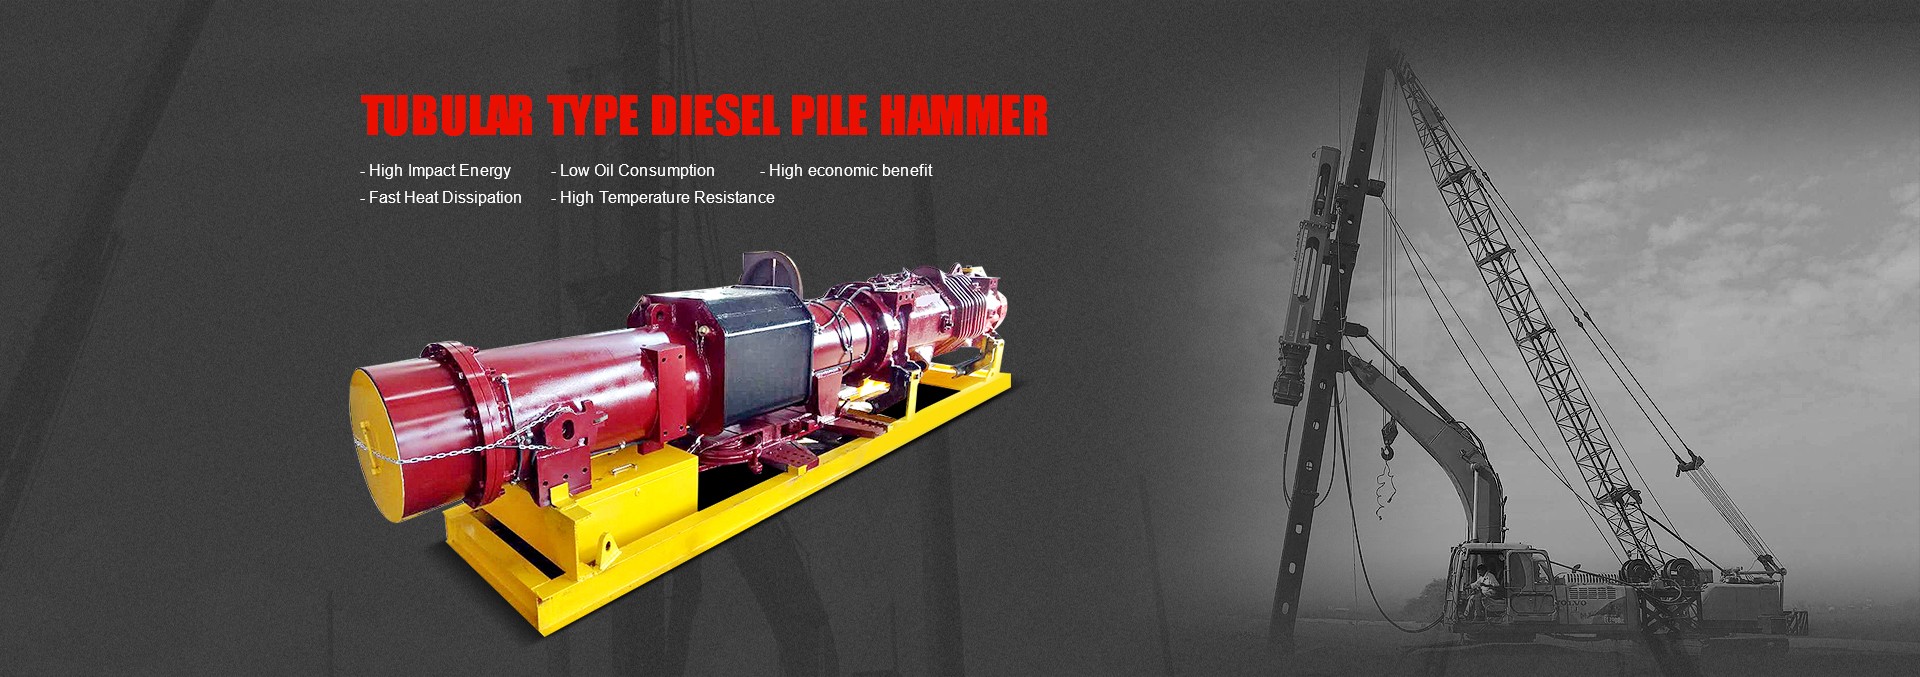 Uri ng Tubular Diesel Pile Hammer